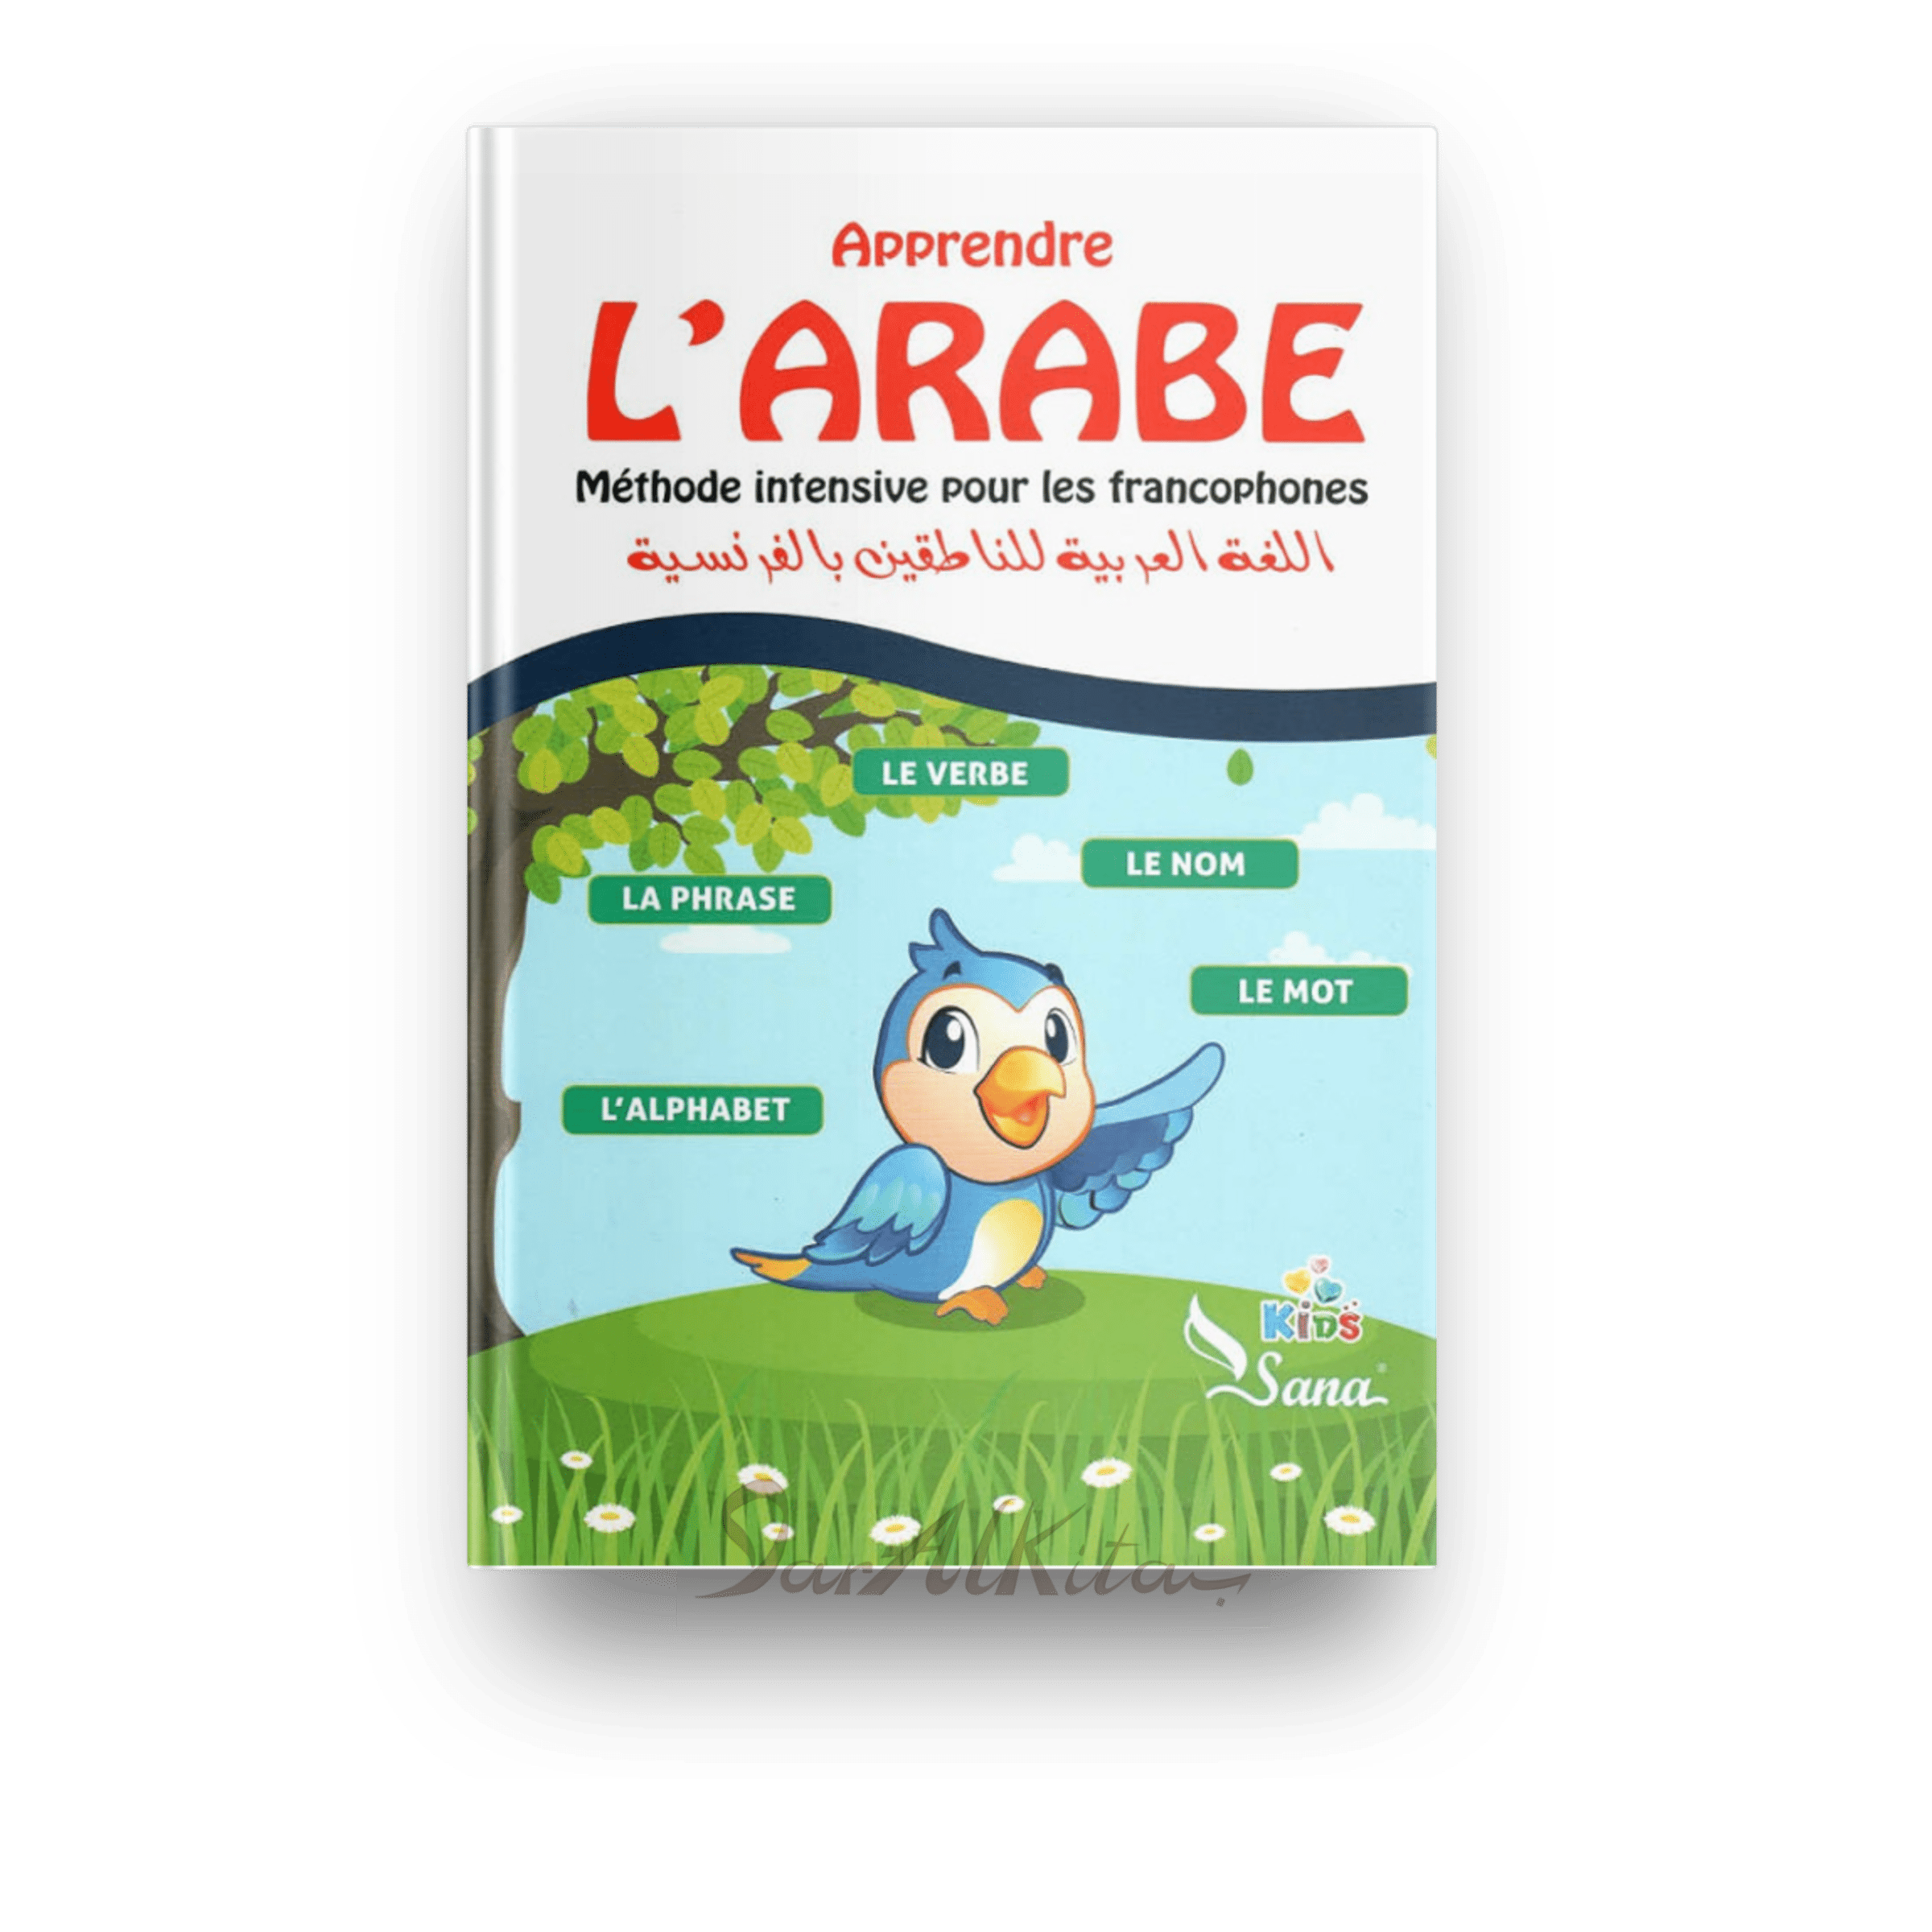 Apprendre-larabe-methode-intensive-pour-les-francophones